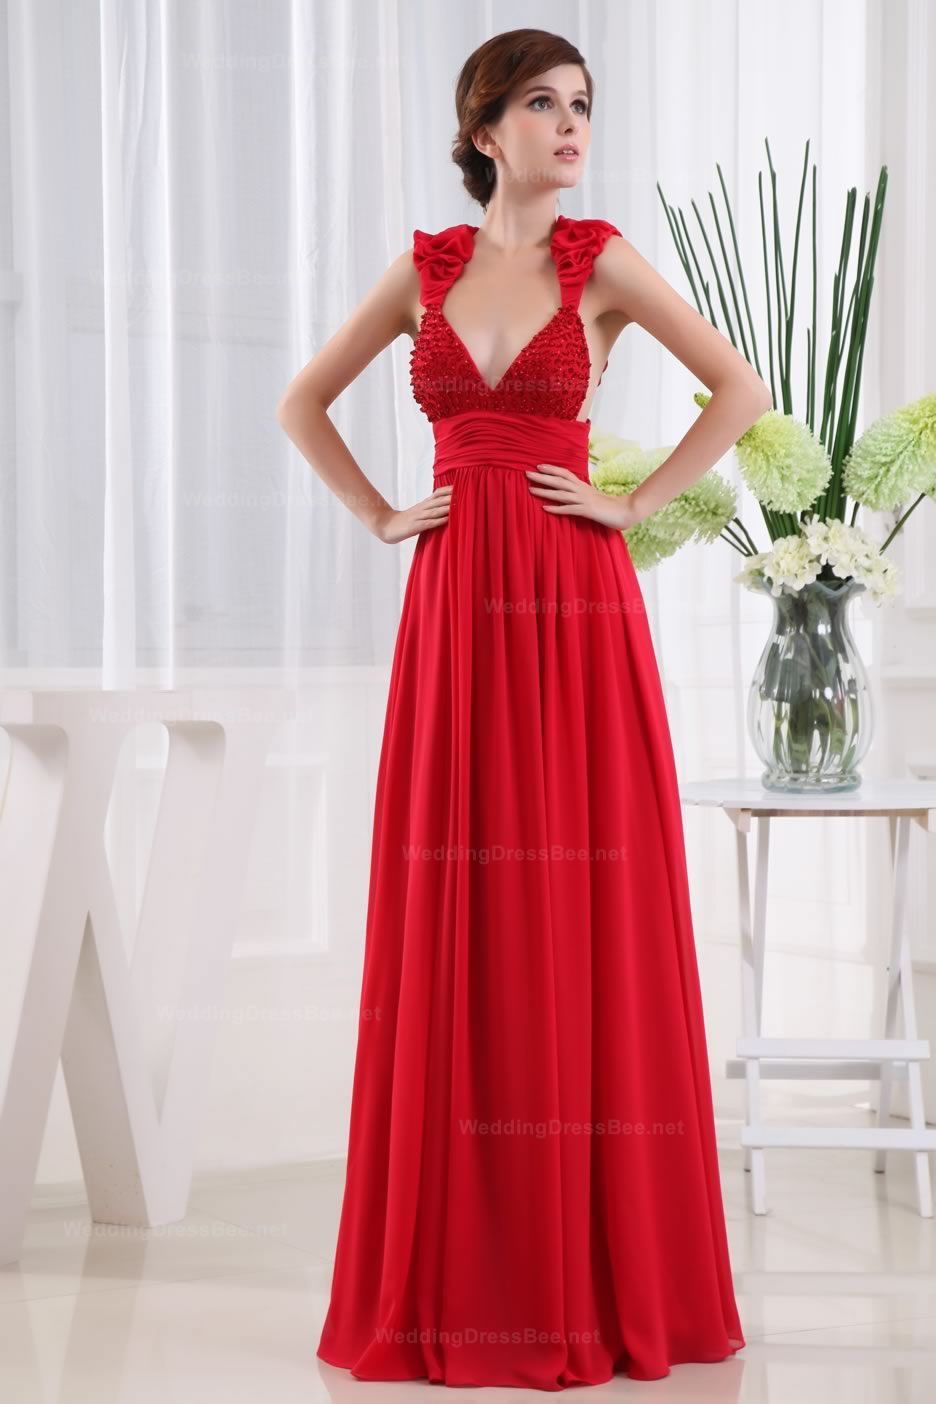 Evening Dress With Empire Waist And Floor-Length